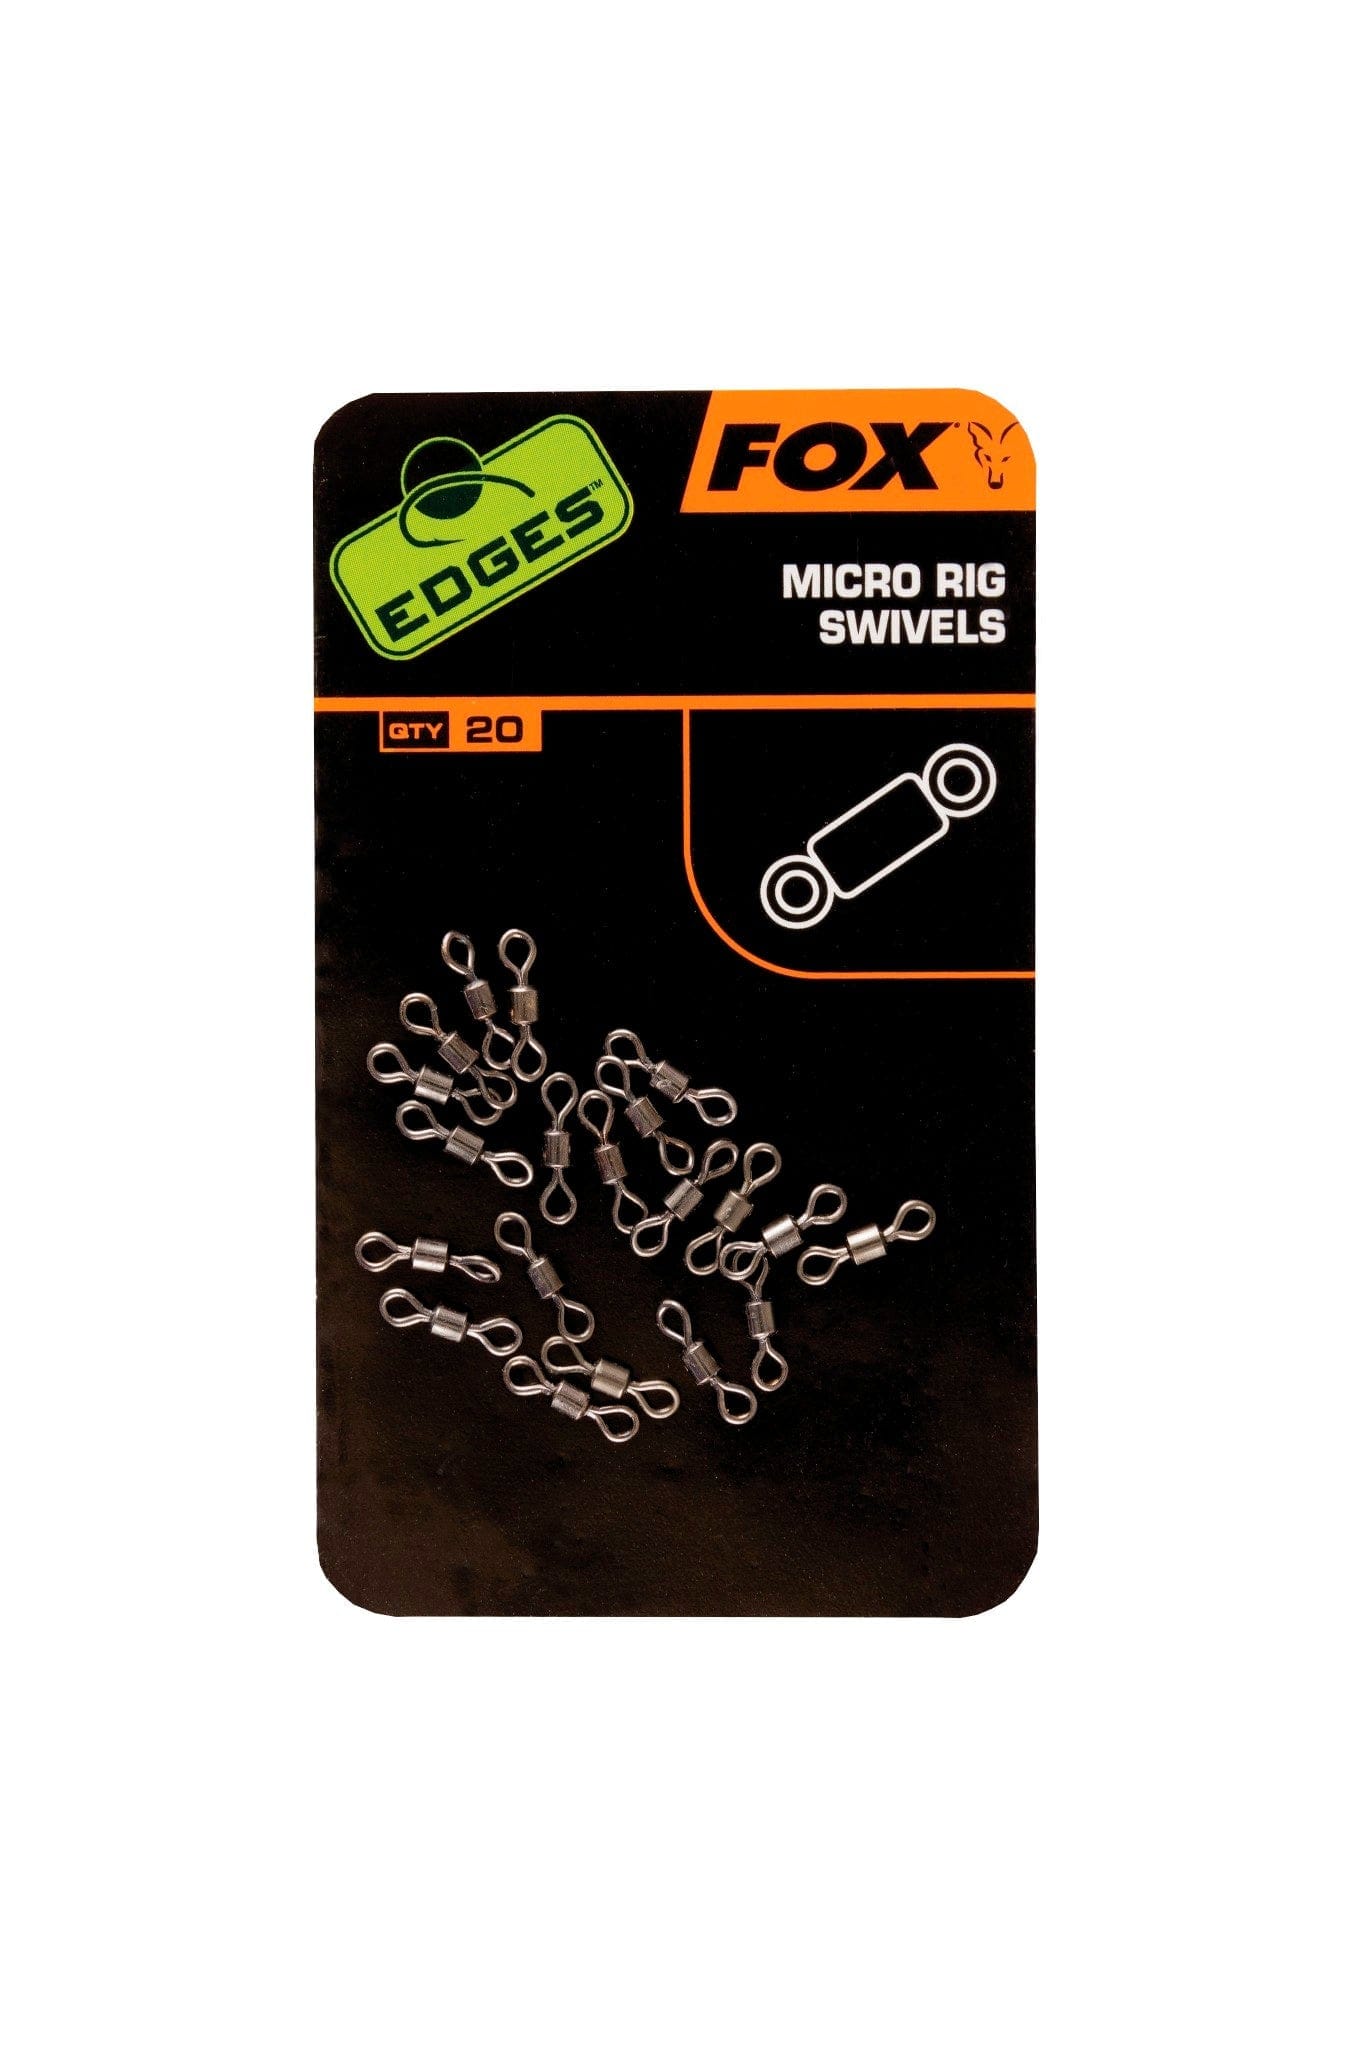 FOX Edges Micro Rig swivel x 20.